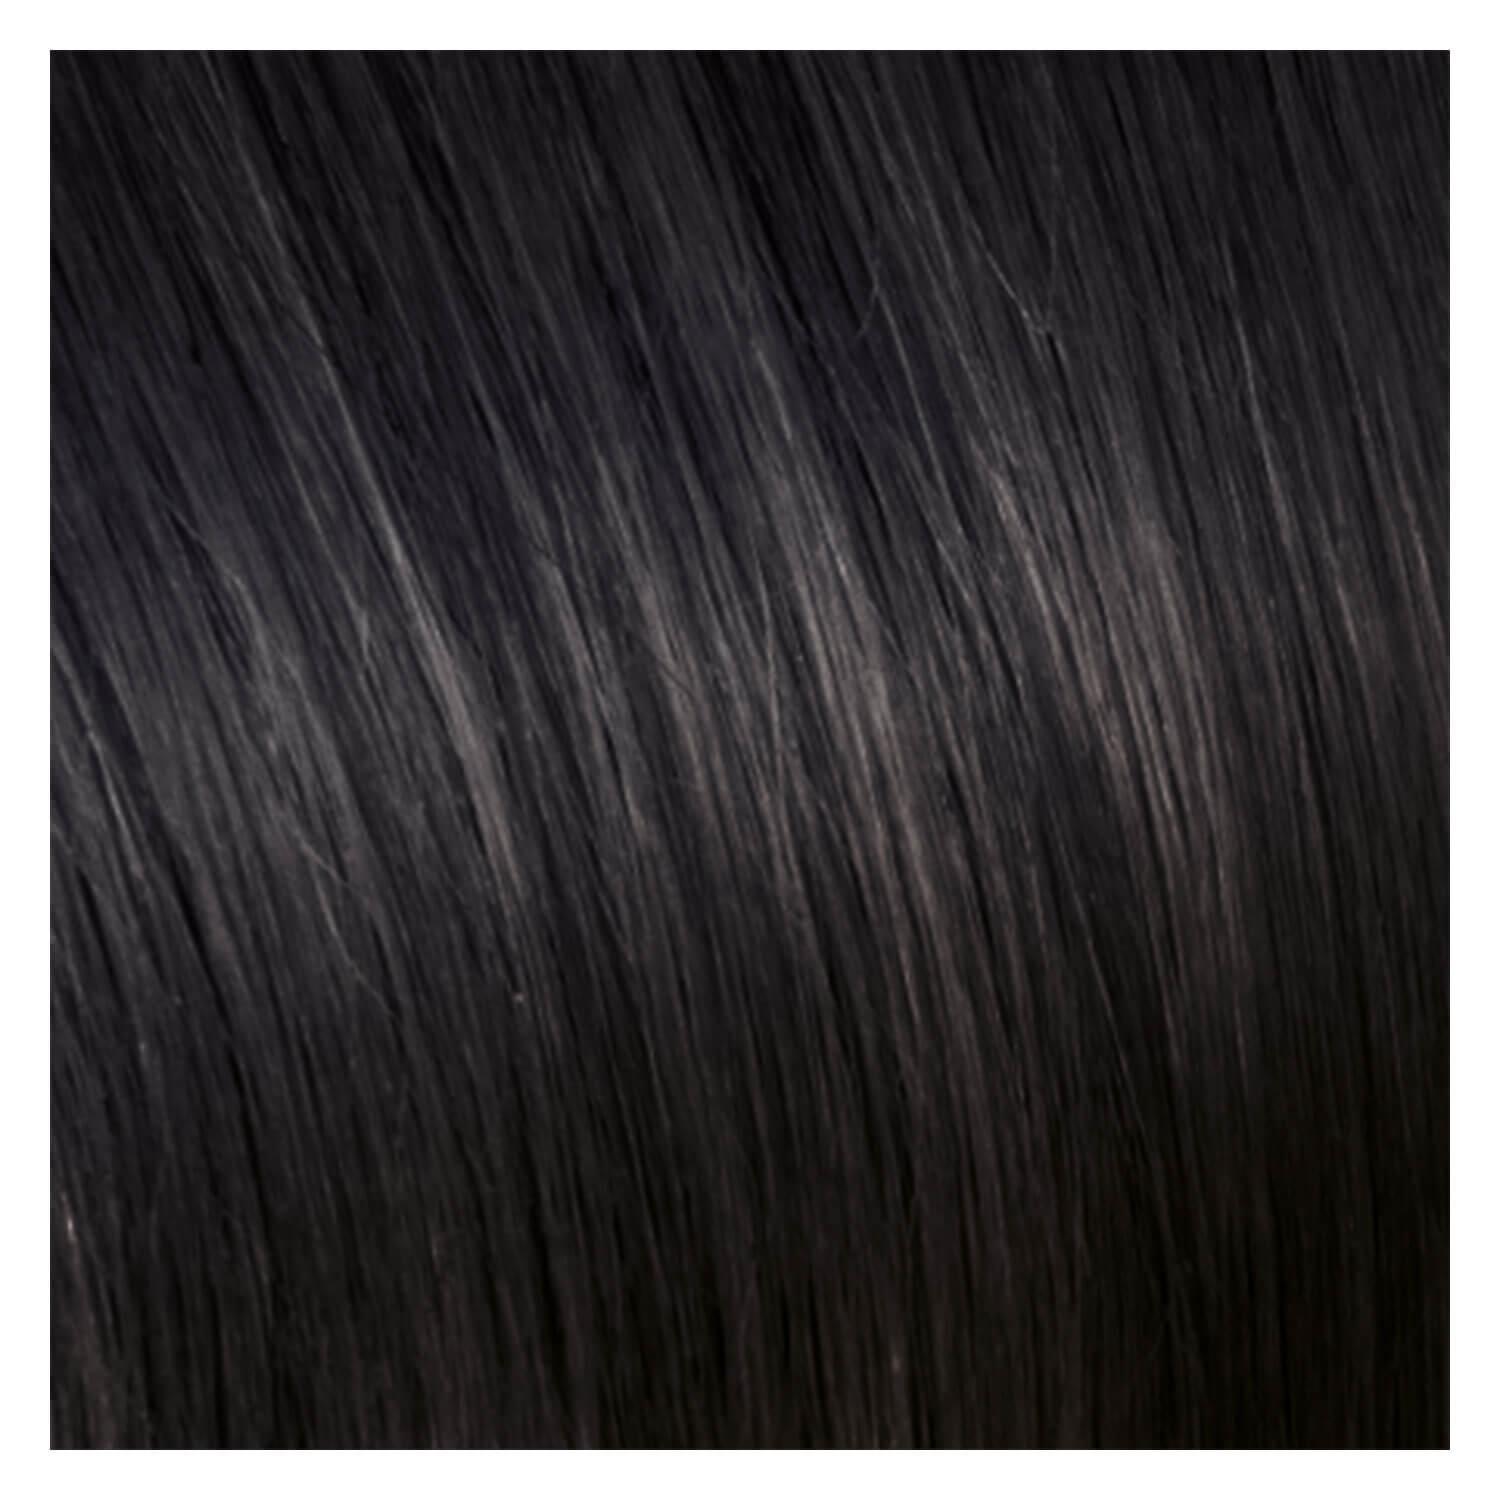 SHE Bonding-System Hair Extensions Wavy - 2 Dark Chestnut Brown 55/60cm